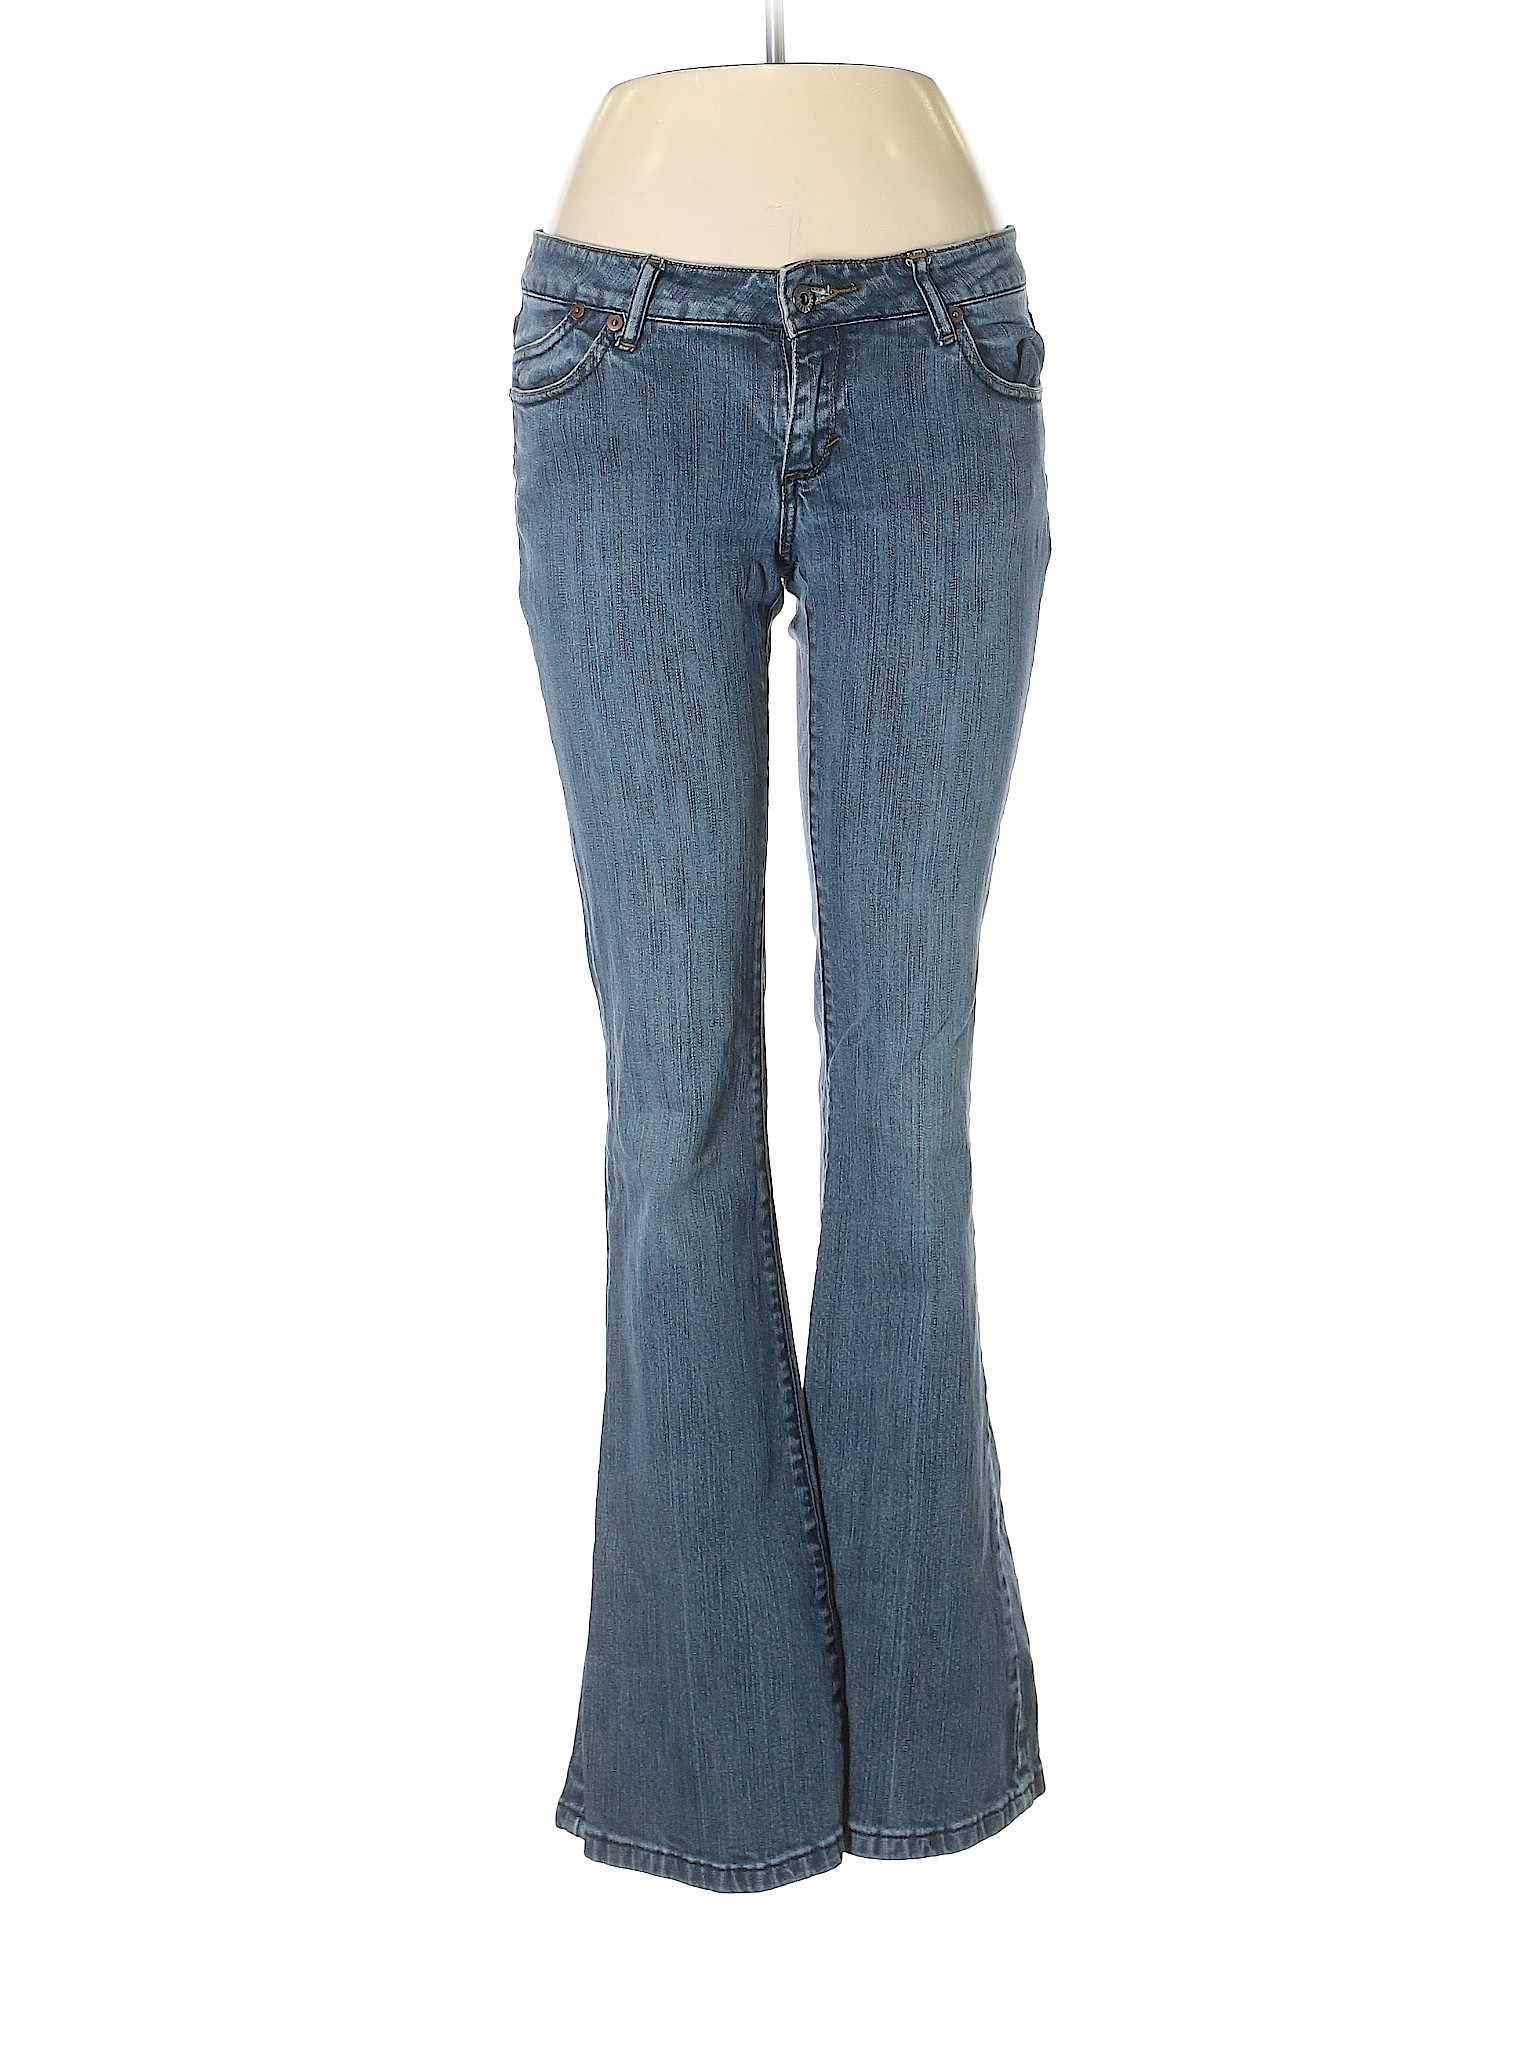 The Limited Women Blue Jeans 6 | eBay